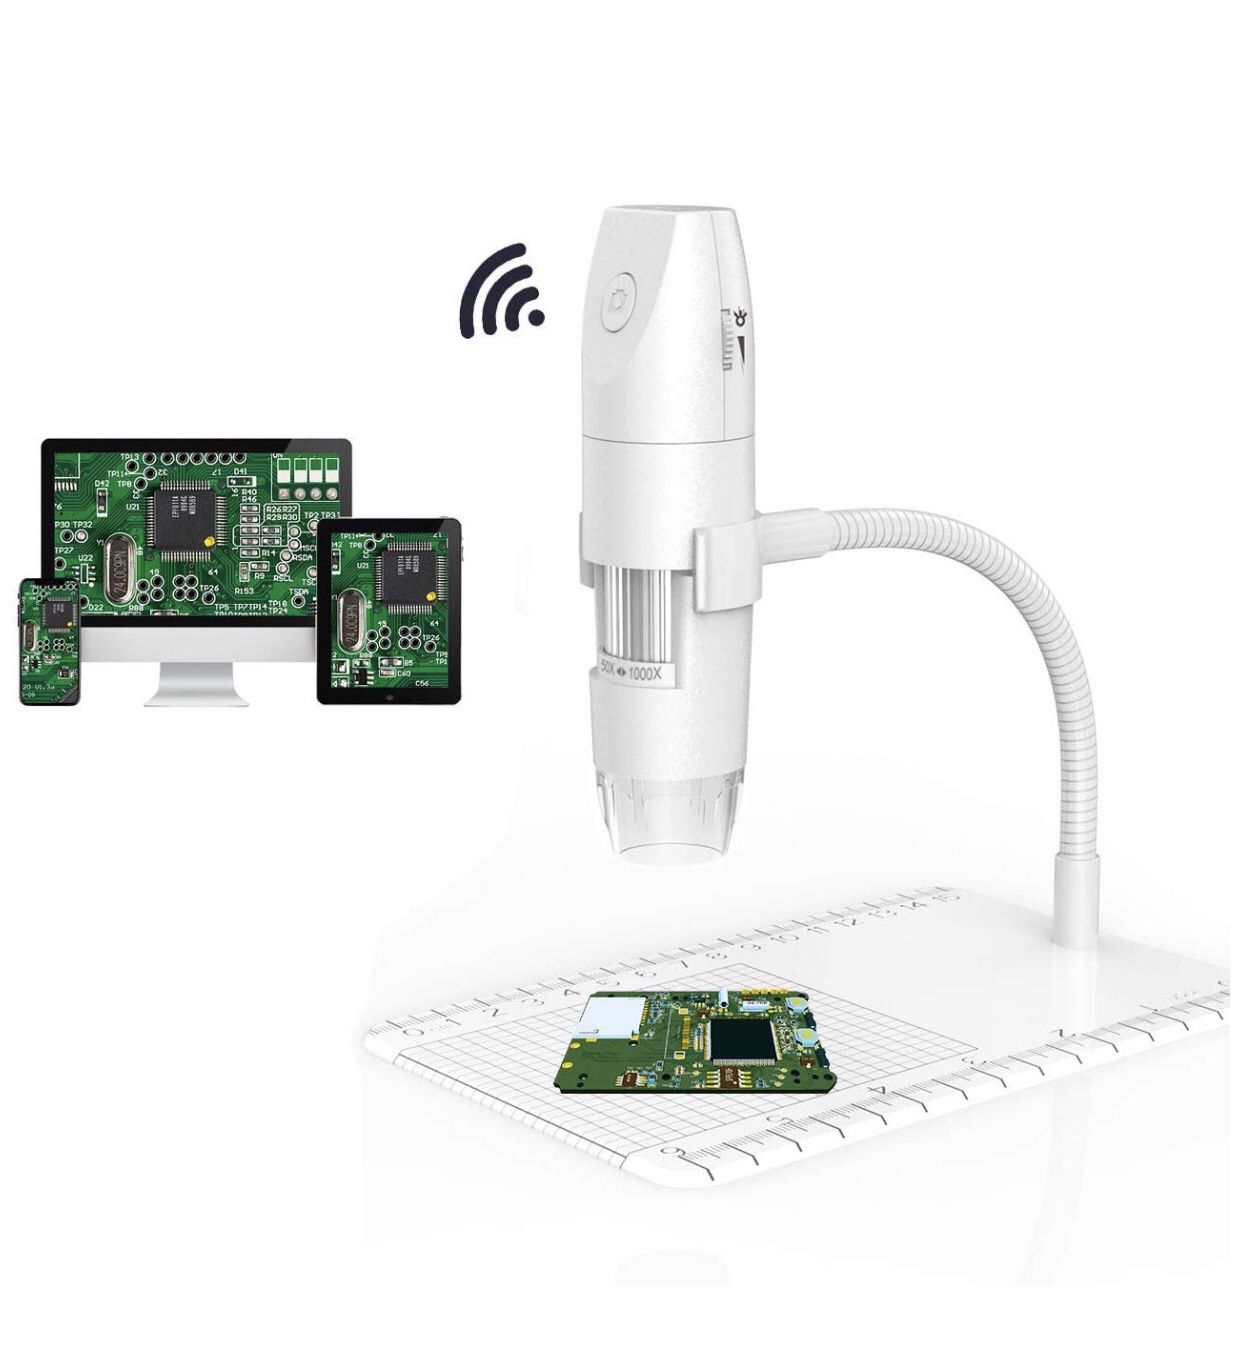 Brand new Wireless Digital Microscope